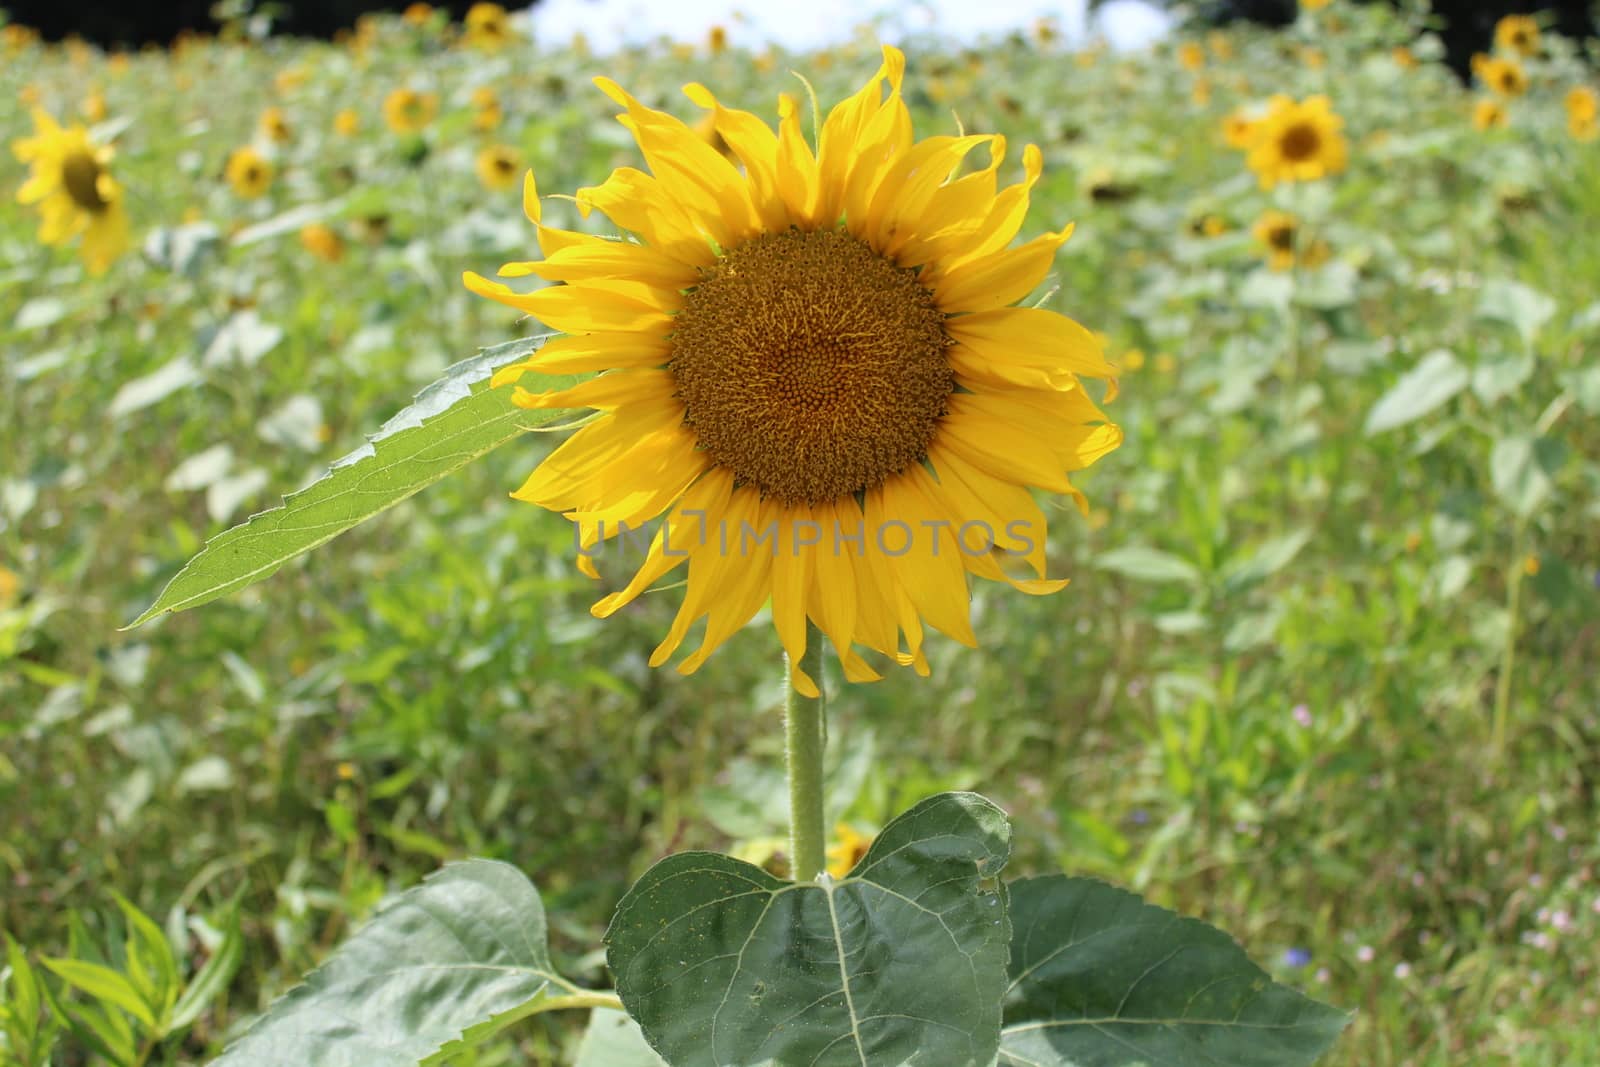 beautiful sunflowers in the summer by martina_unbehauen